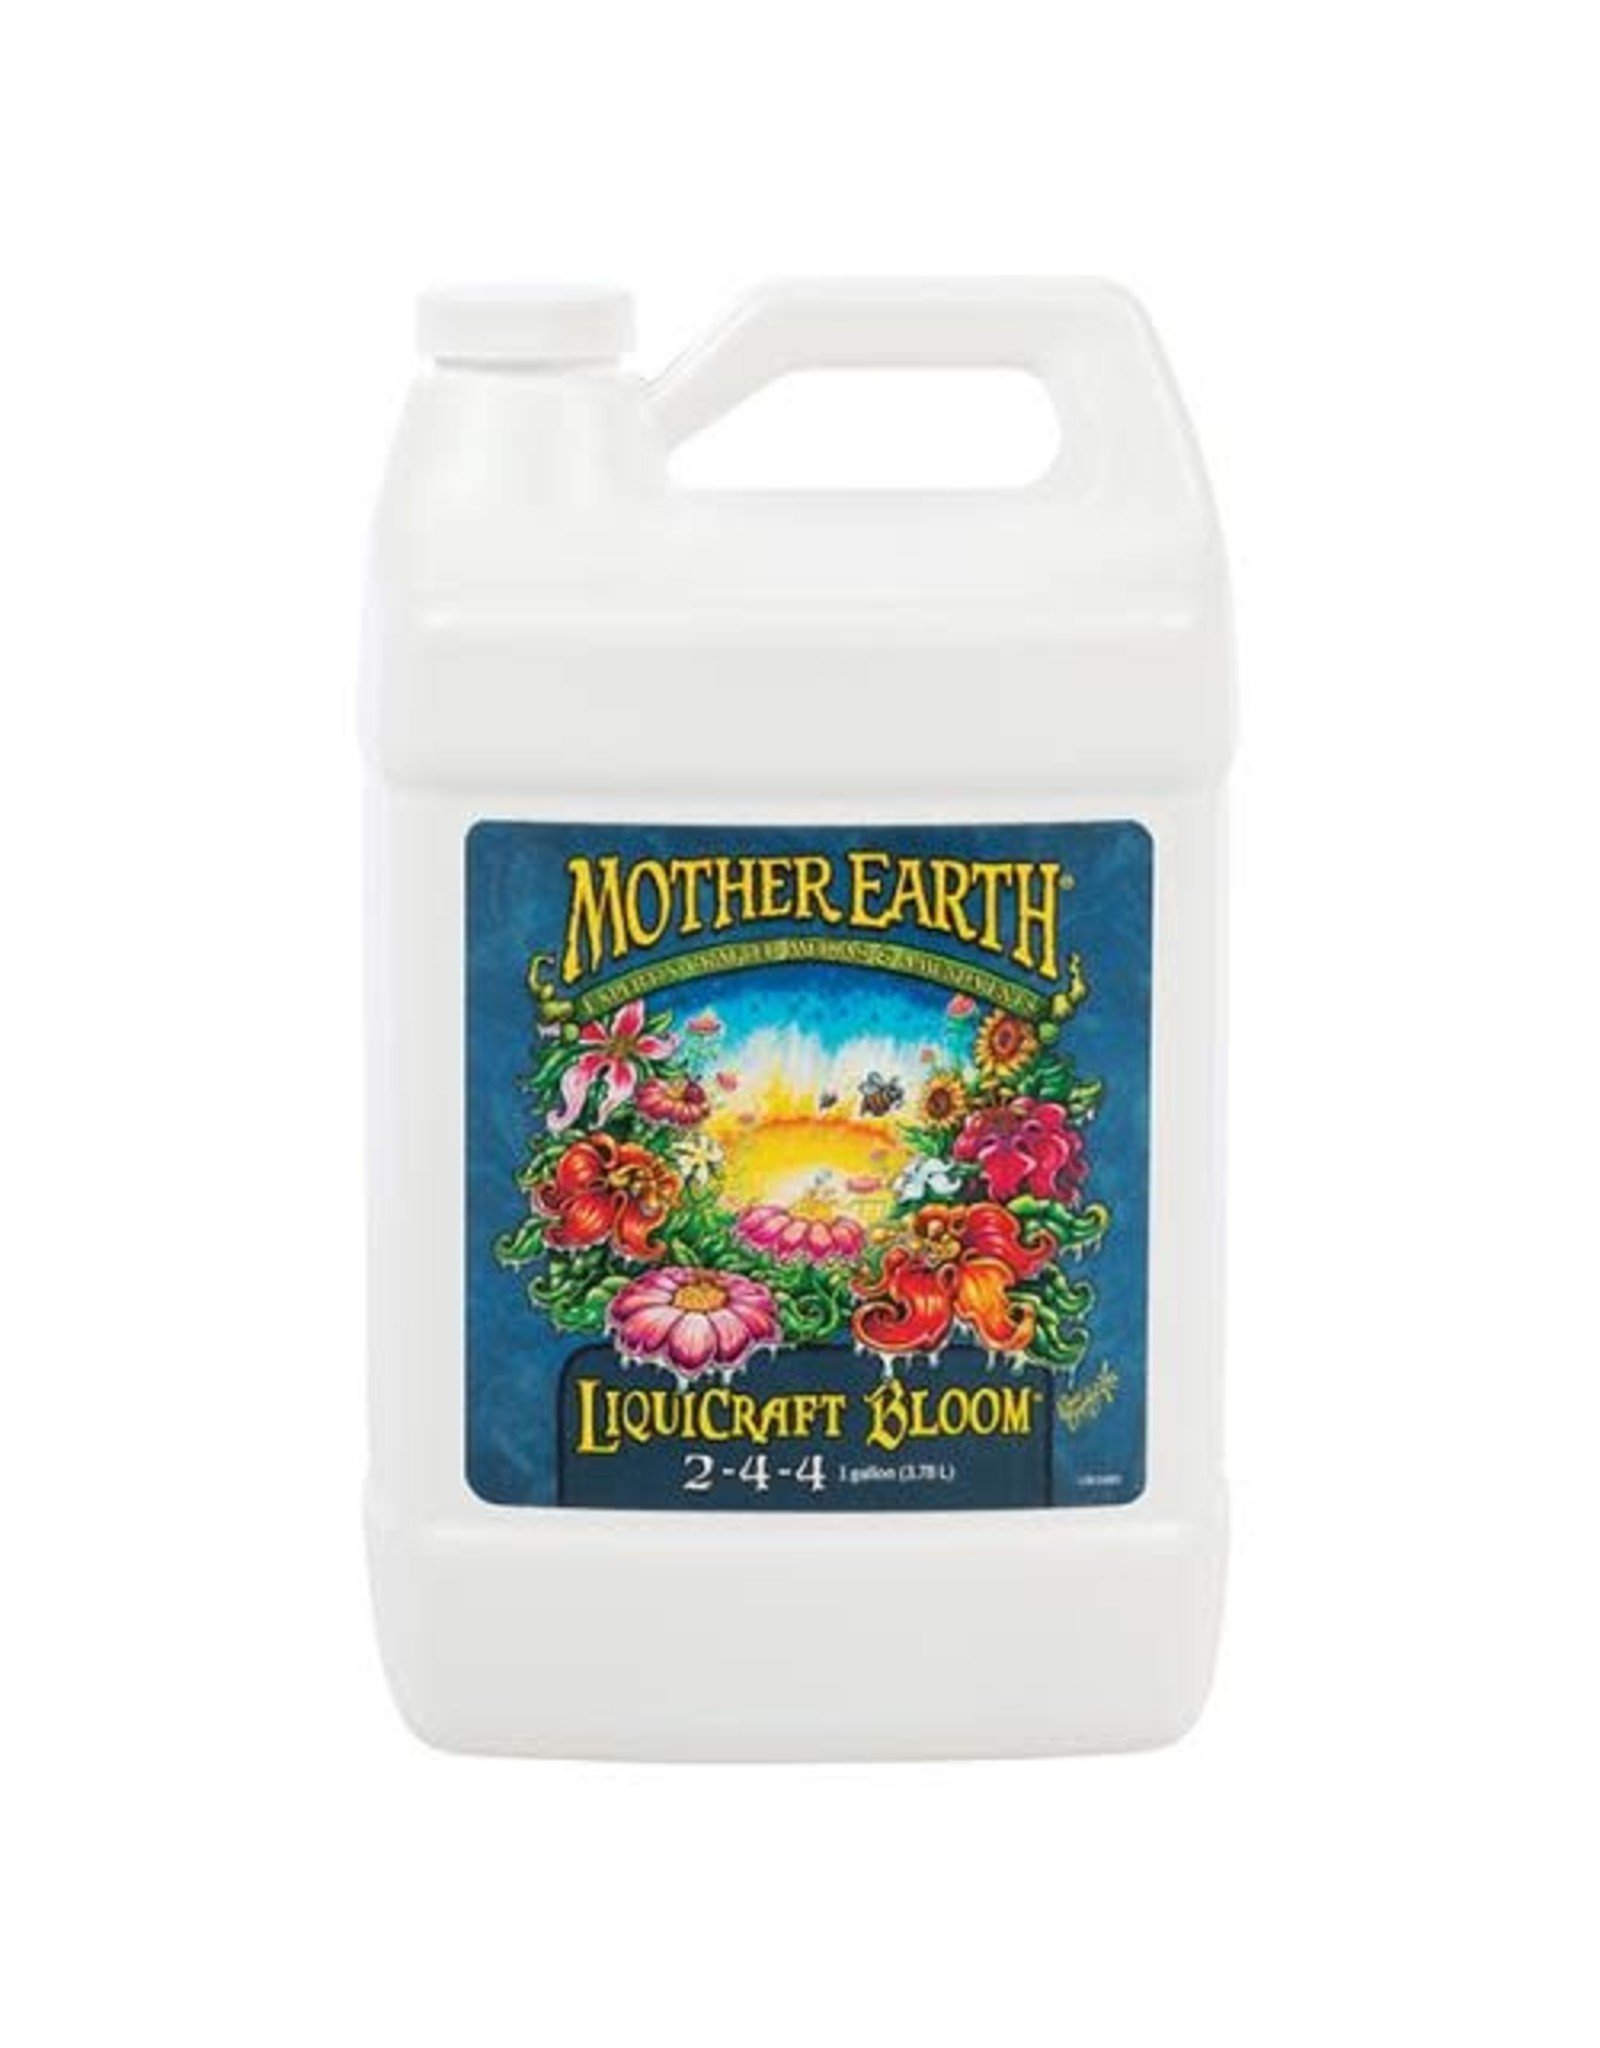 Mother Earth Mother Earth Liquicraft Bloom Quart